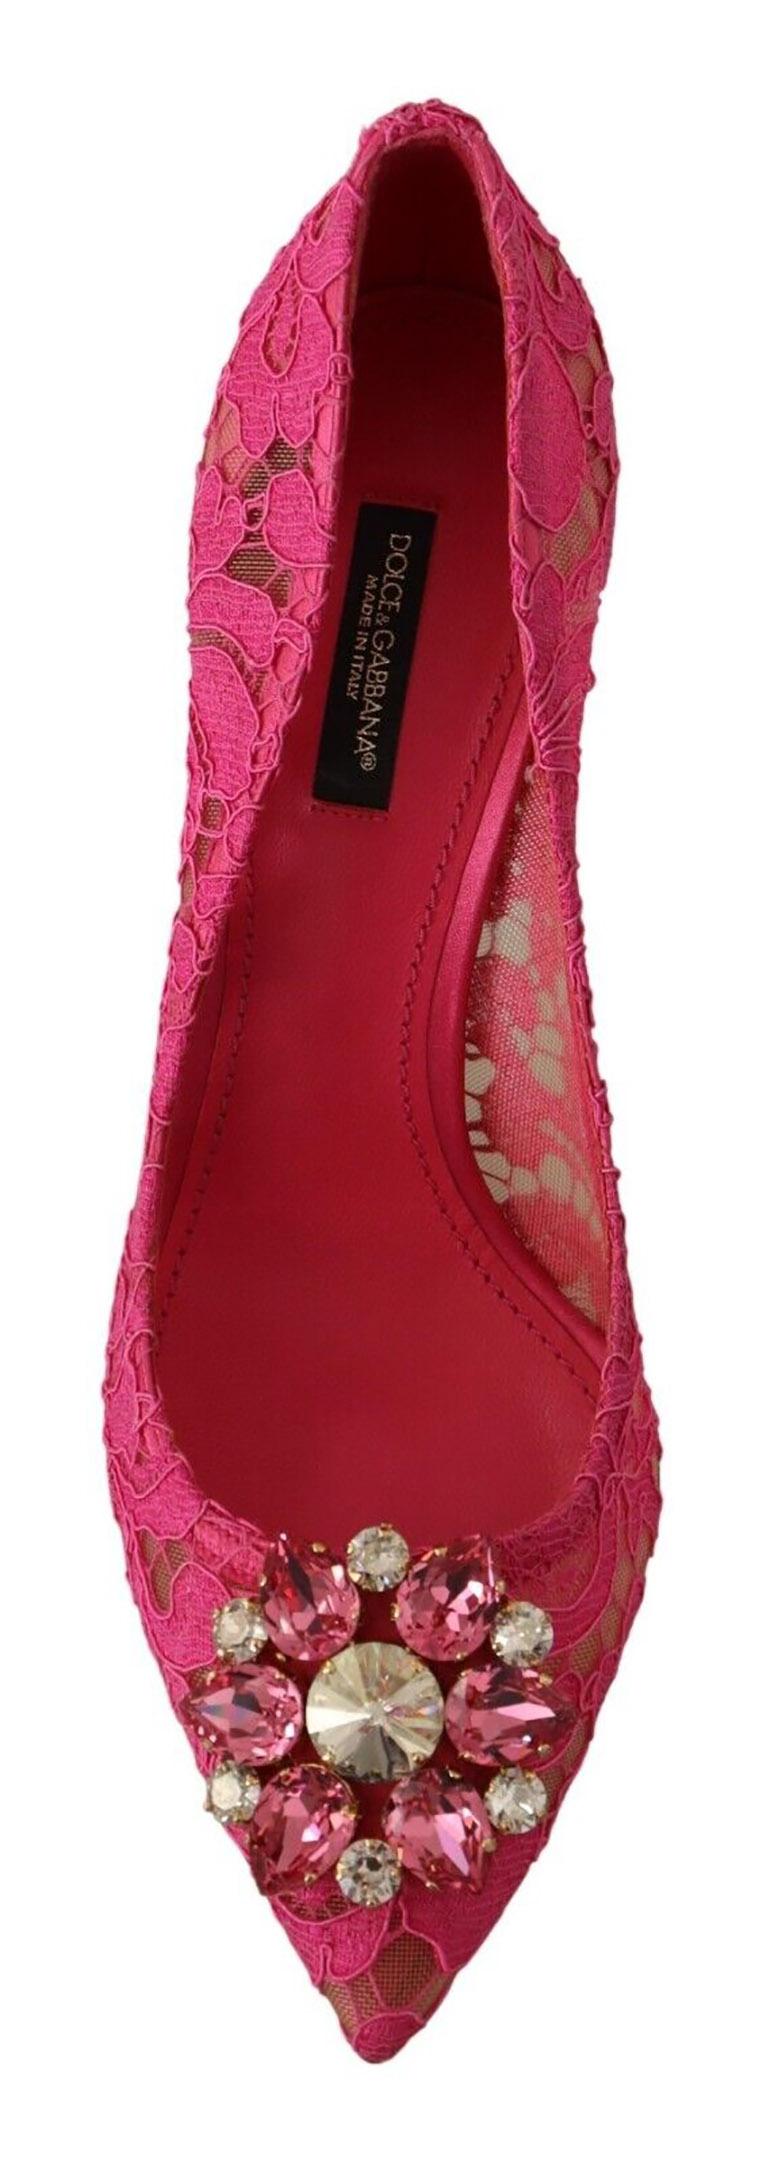 Dolce & Gabbana Pink Lace Leather Bellucci Shoes Heels Pumps Floral DG Crystals 4